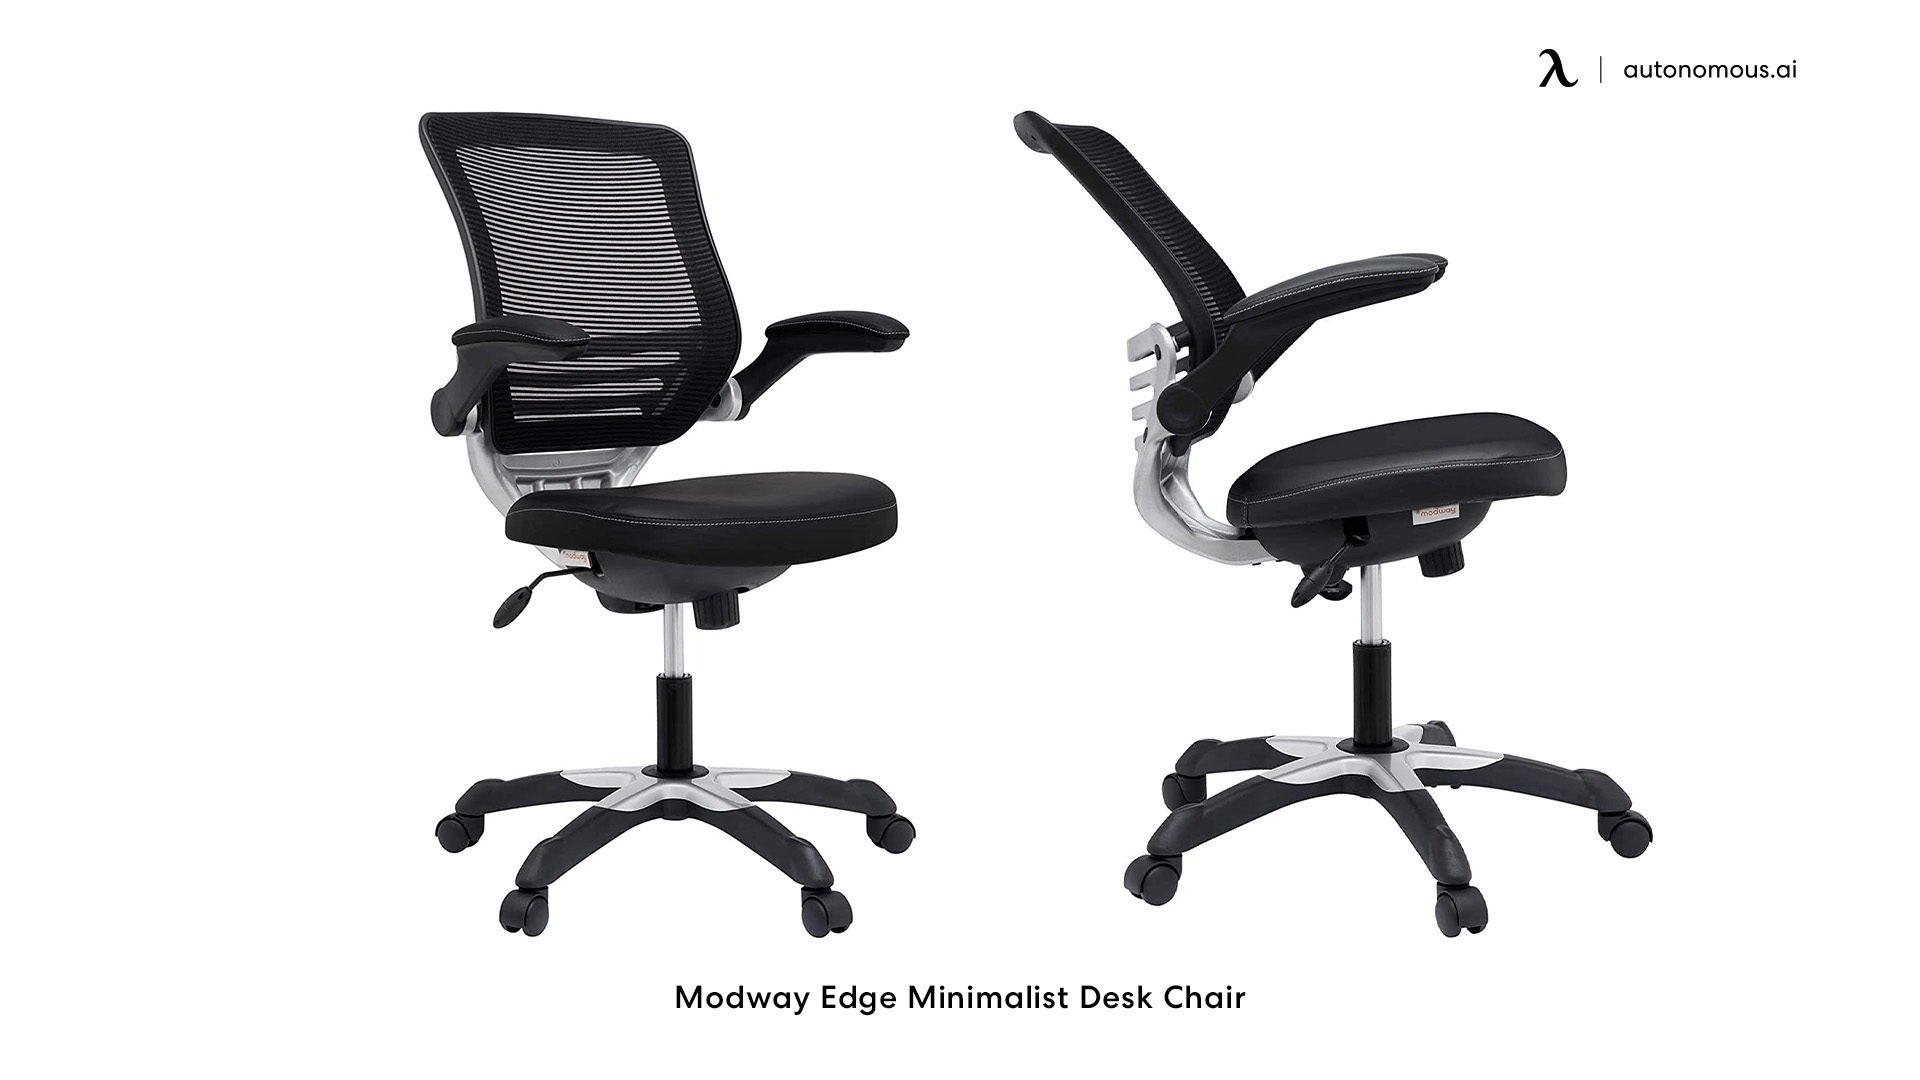 Modway Edge minimalist office chair